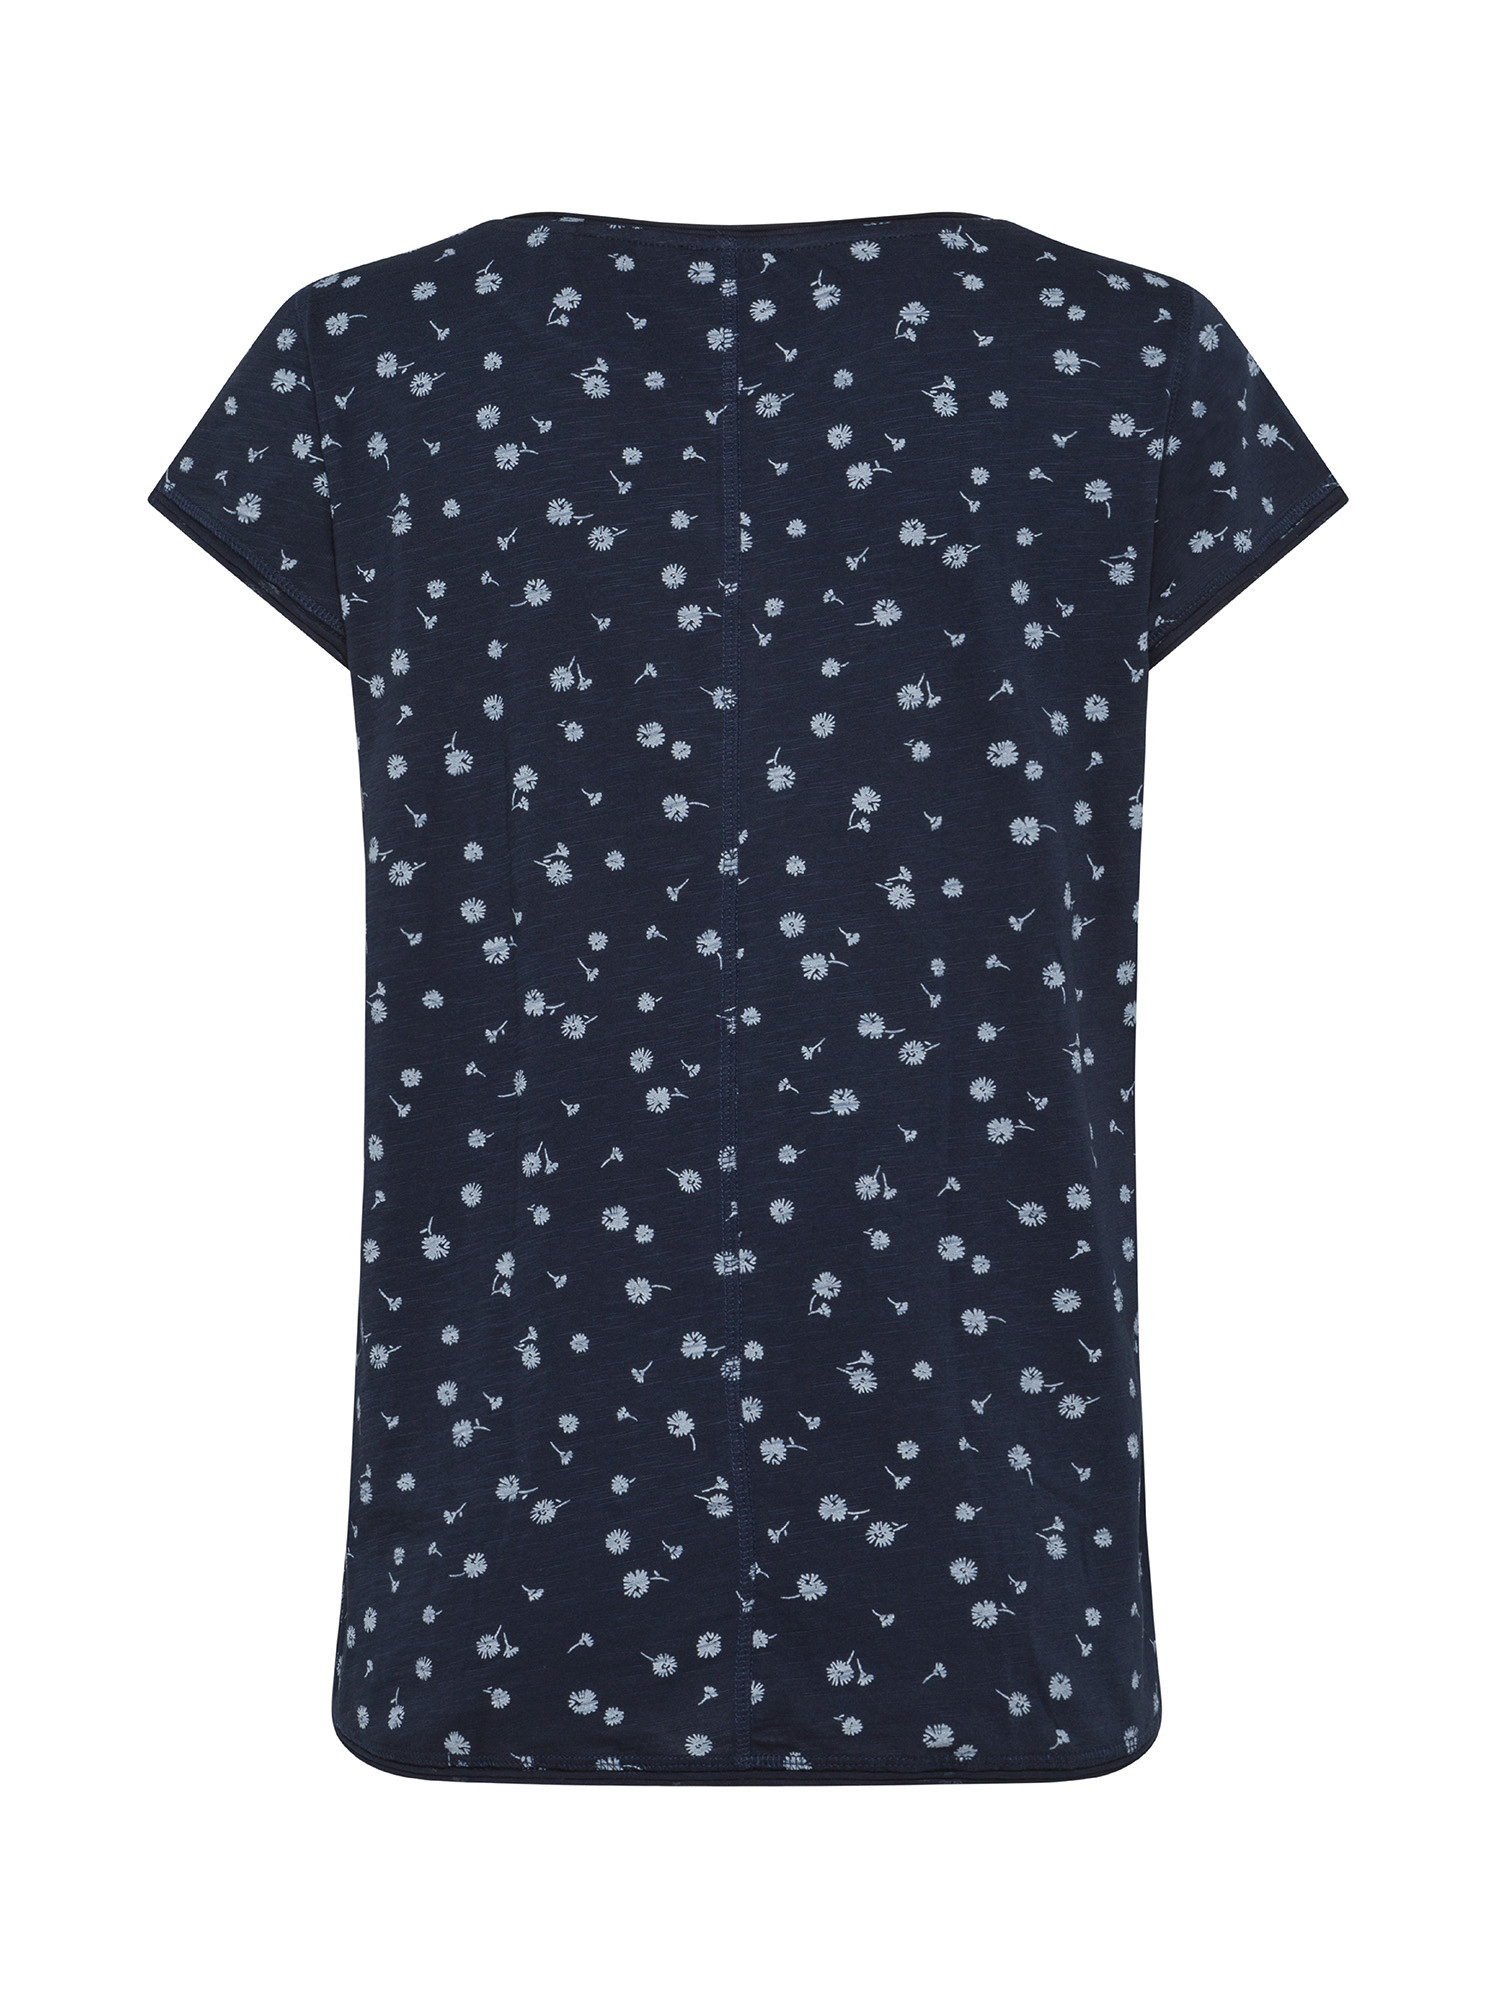 Esprit - T-shirt con stampa, Blu scuro, large image number 1